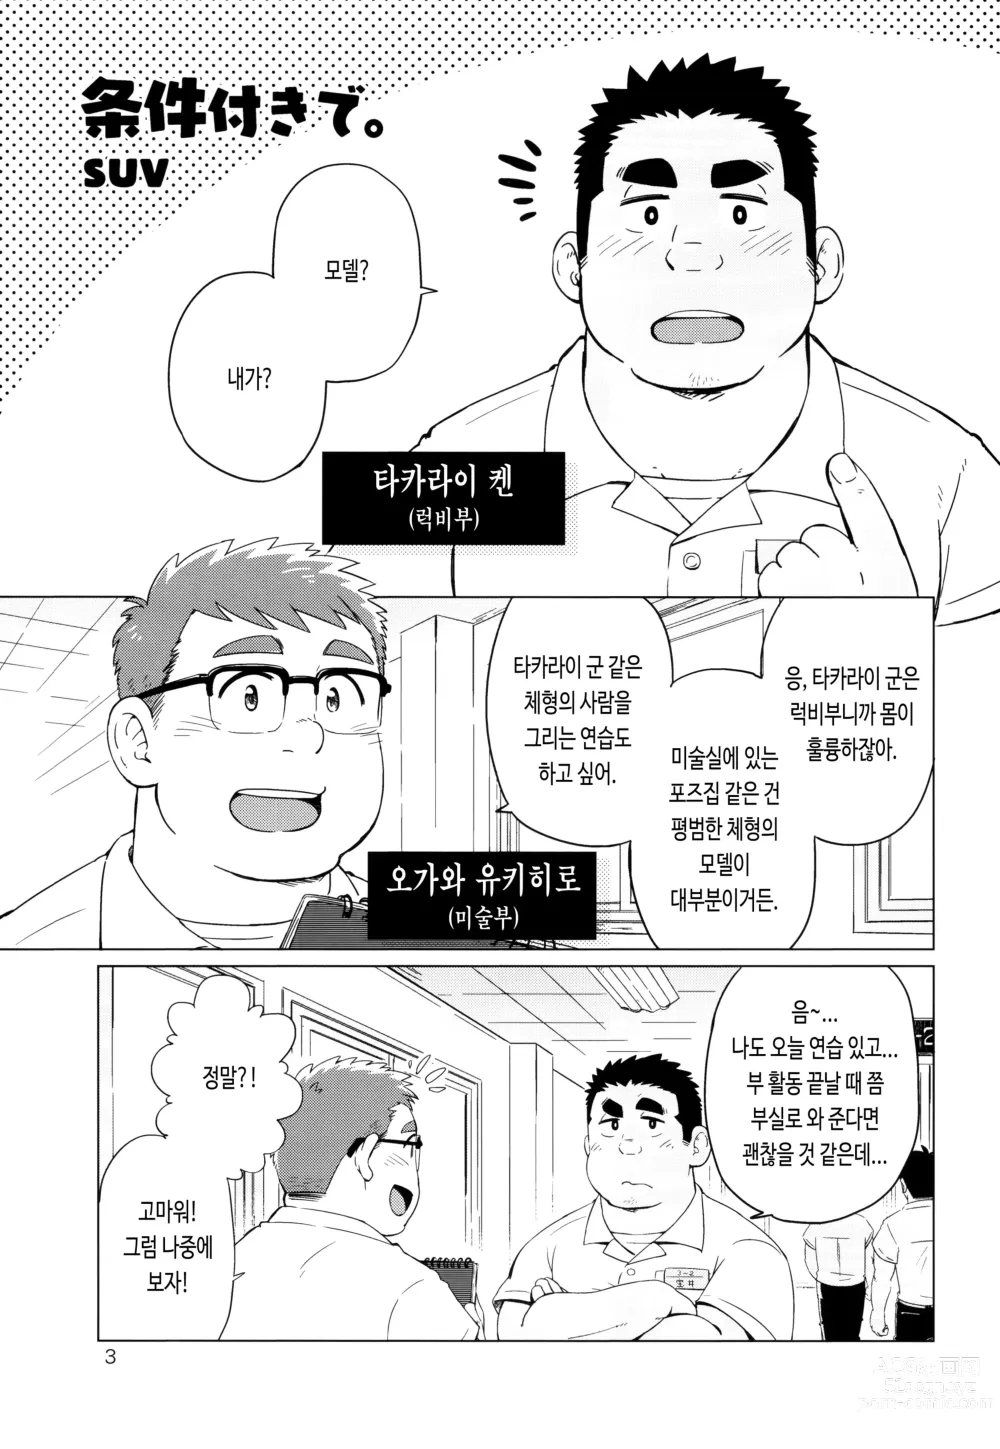 Page 5 of doujinshi 조건부로.